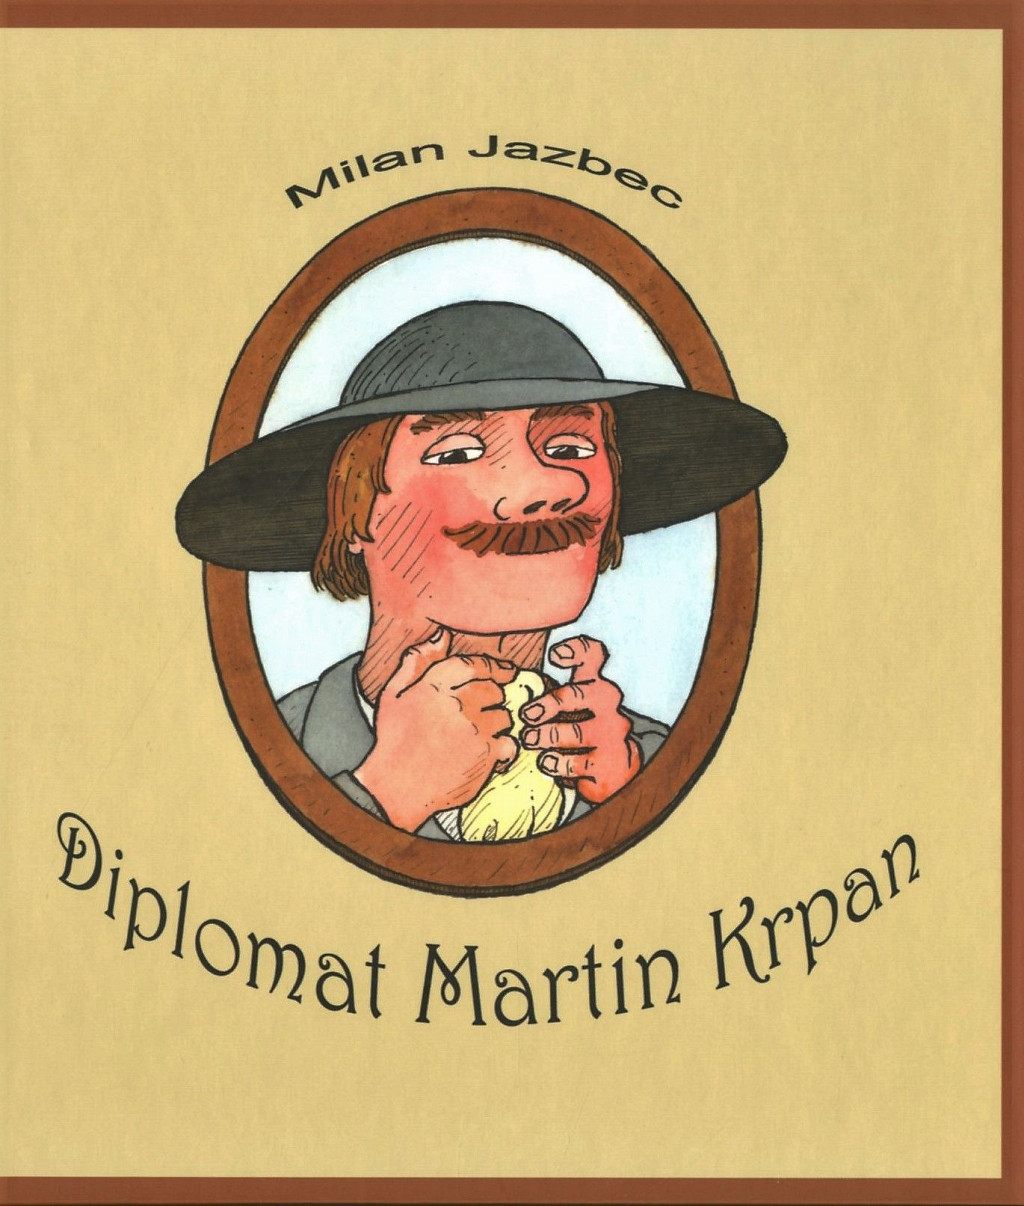 Diplomat Martin Krpan